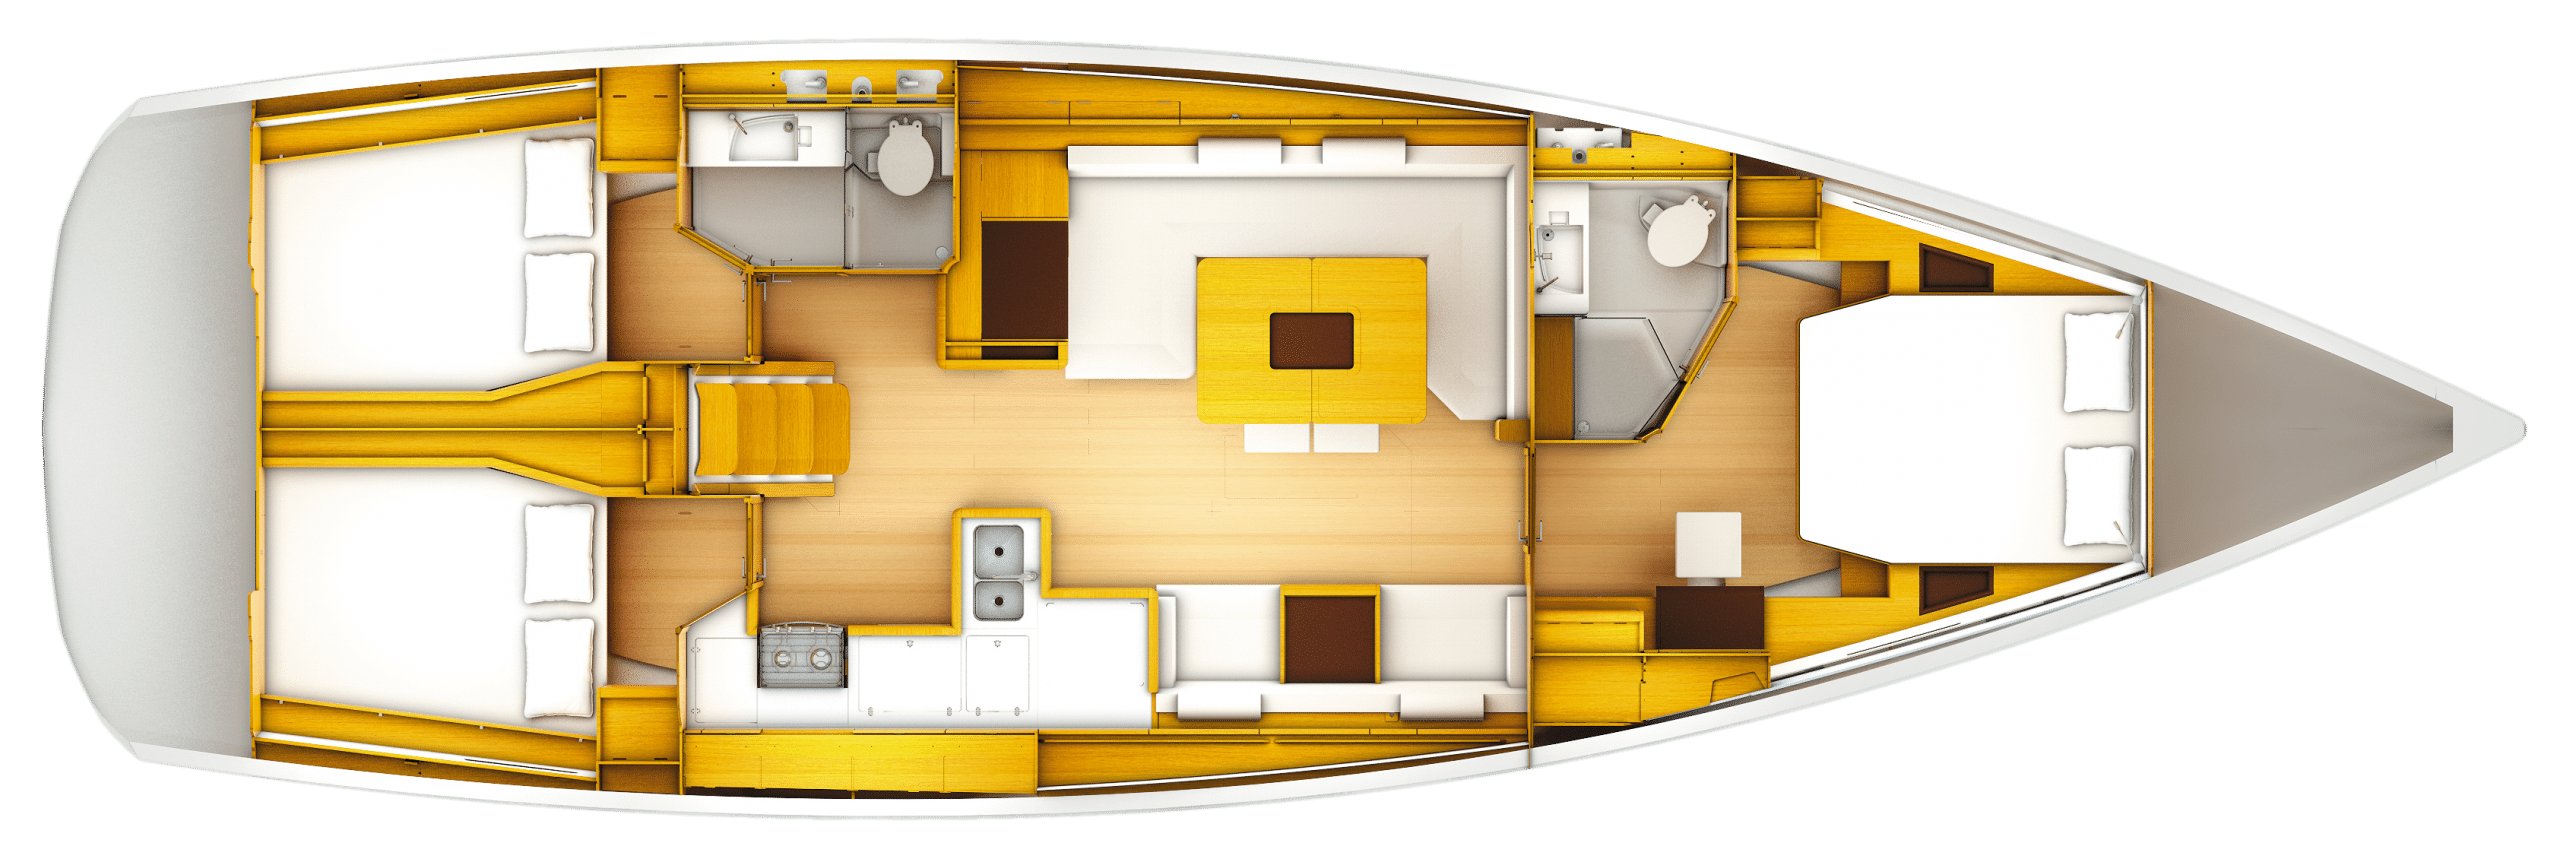 jeanneau-sun-odyssey-519-layout-3-cabins-2-heads